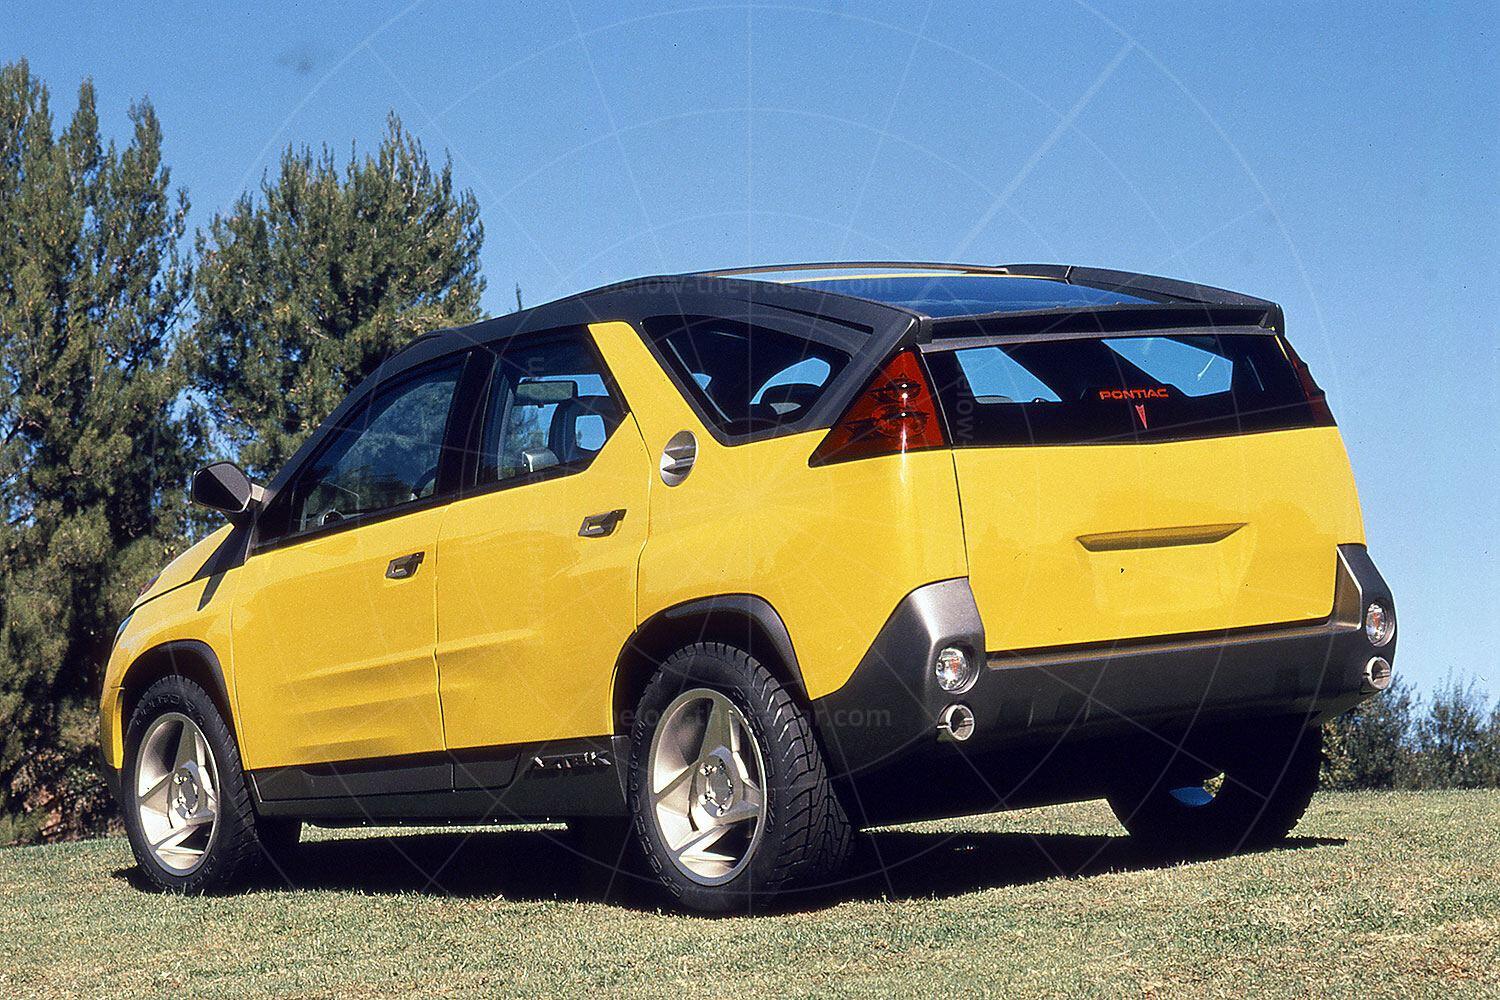 Pontiac Aztek concept Pic: General Motors | Pontiac Aztek concept